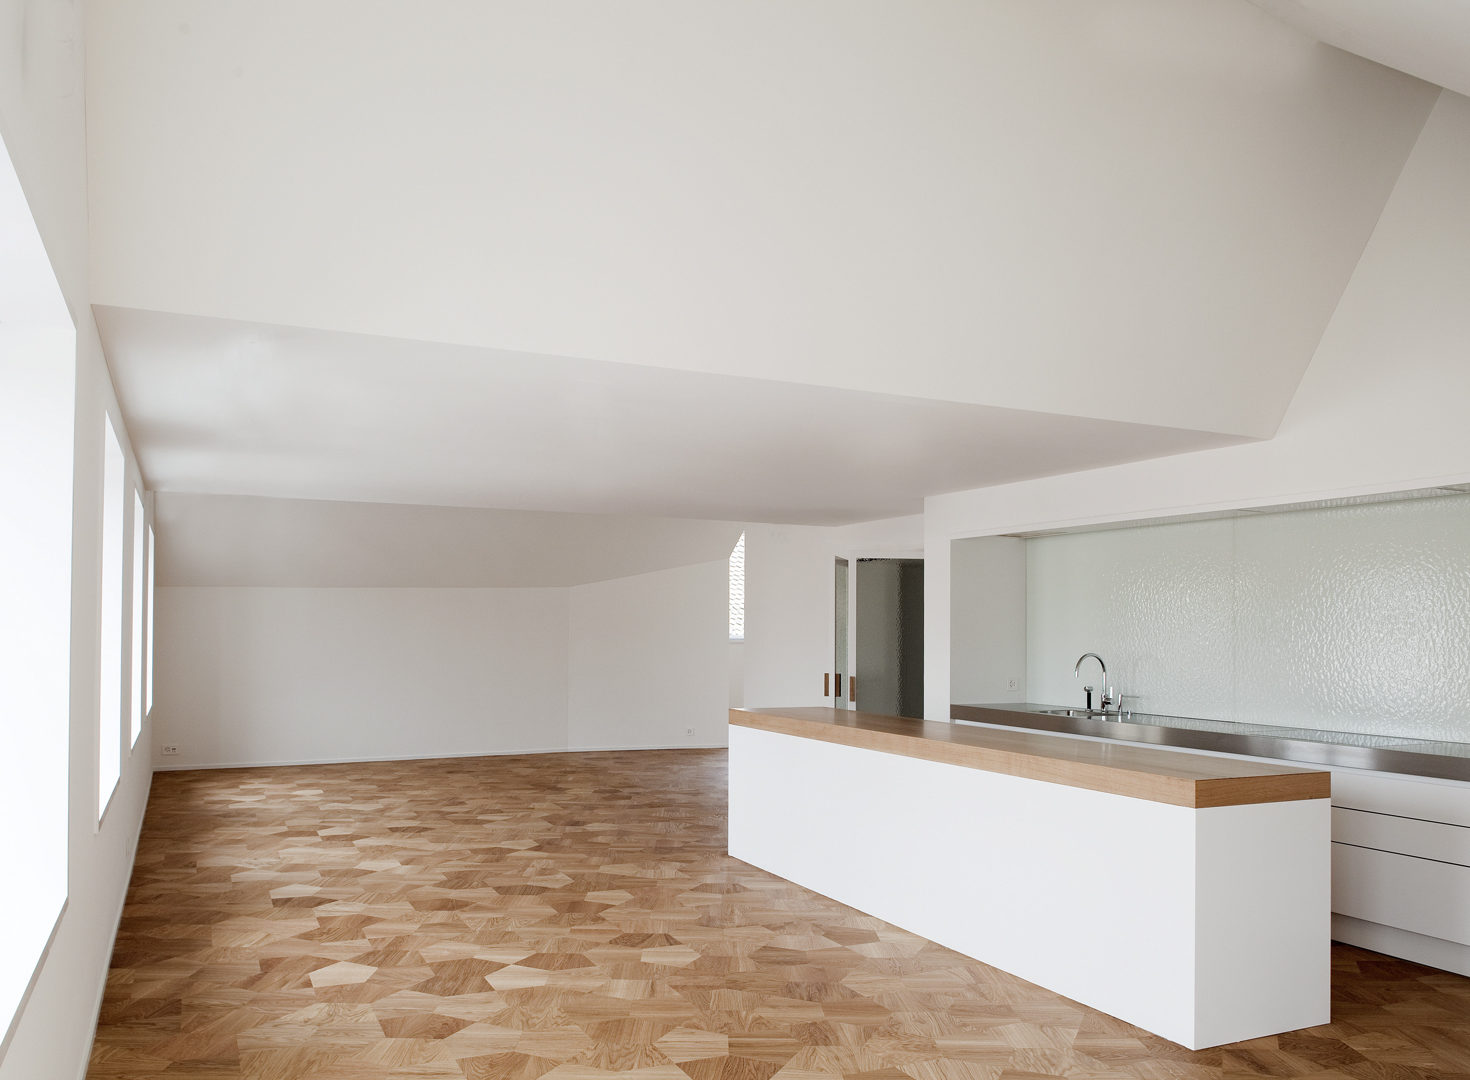 Strato_design_Non Plus Ultra_bespoke kitchen project in Zuerich_Stratocolor white_Oak wood_phDanielKessler_IMG_1501